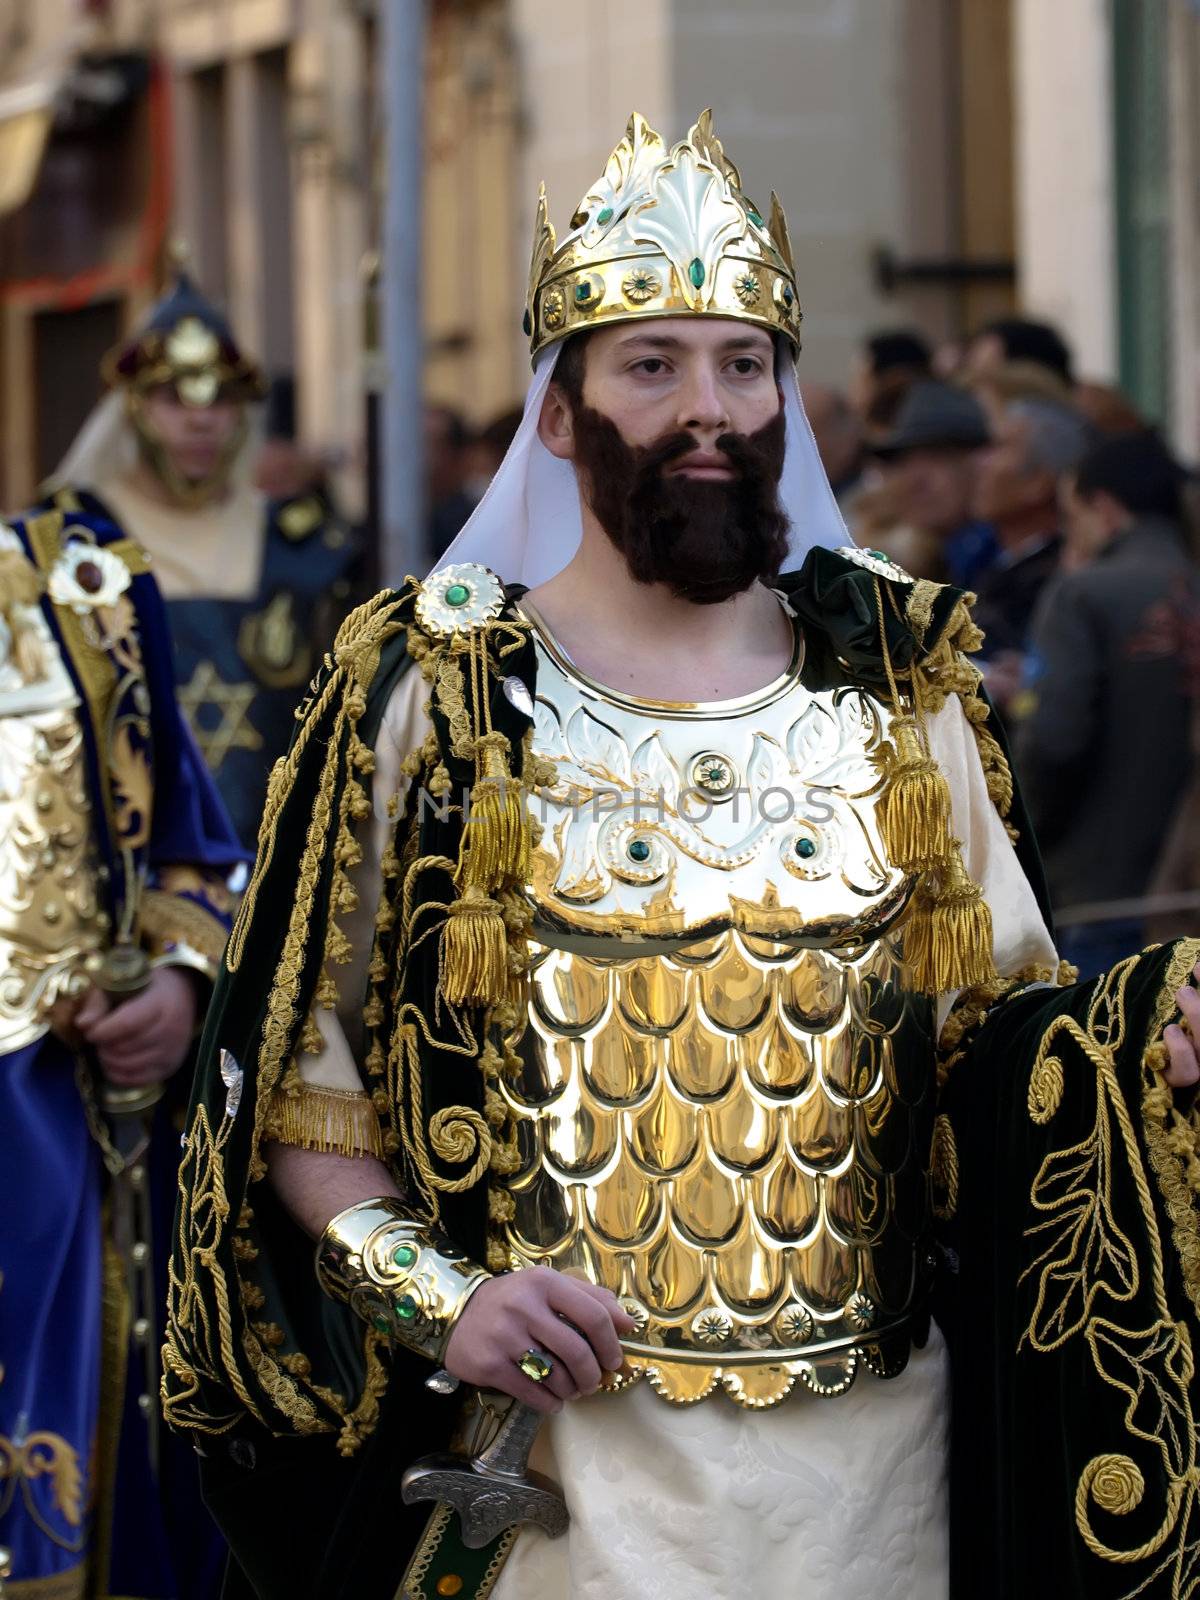 King Herod by PhotoWorks